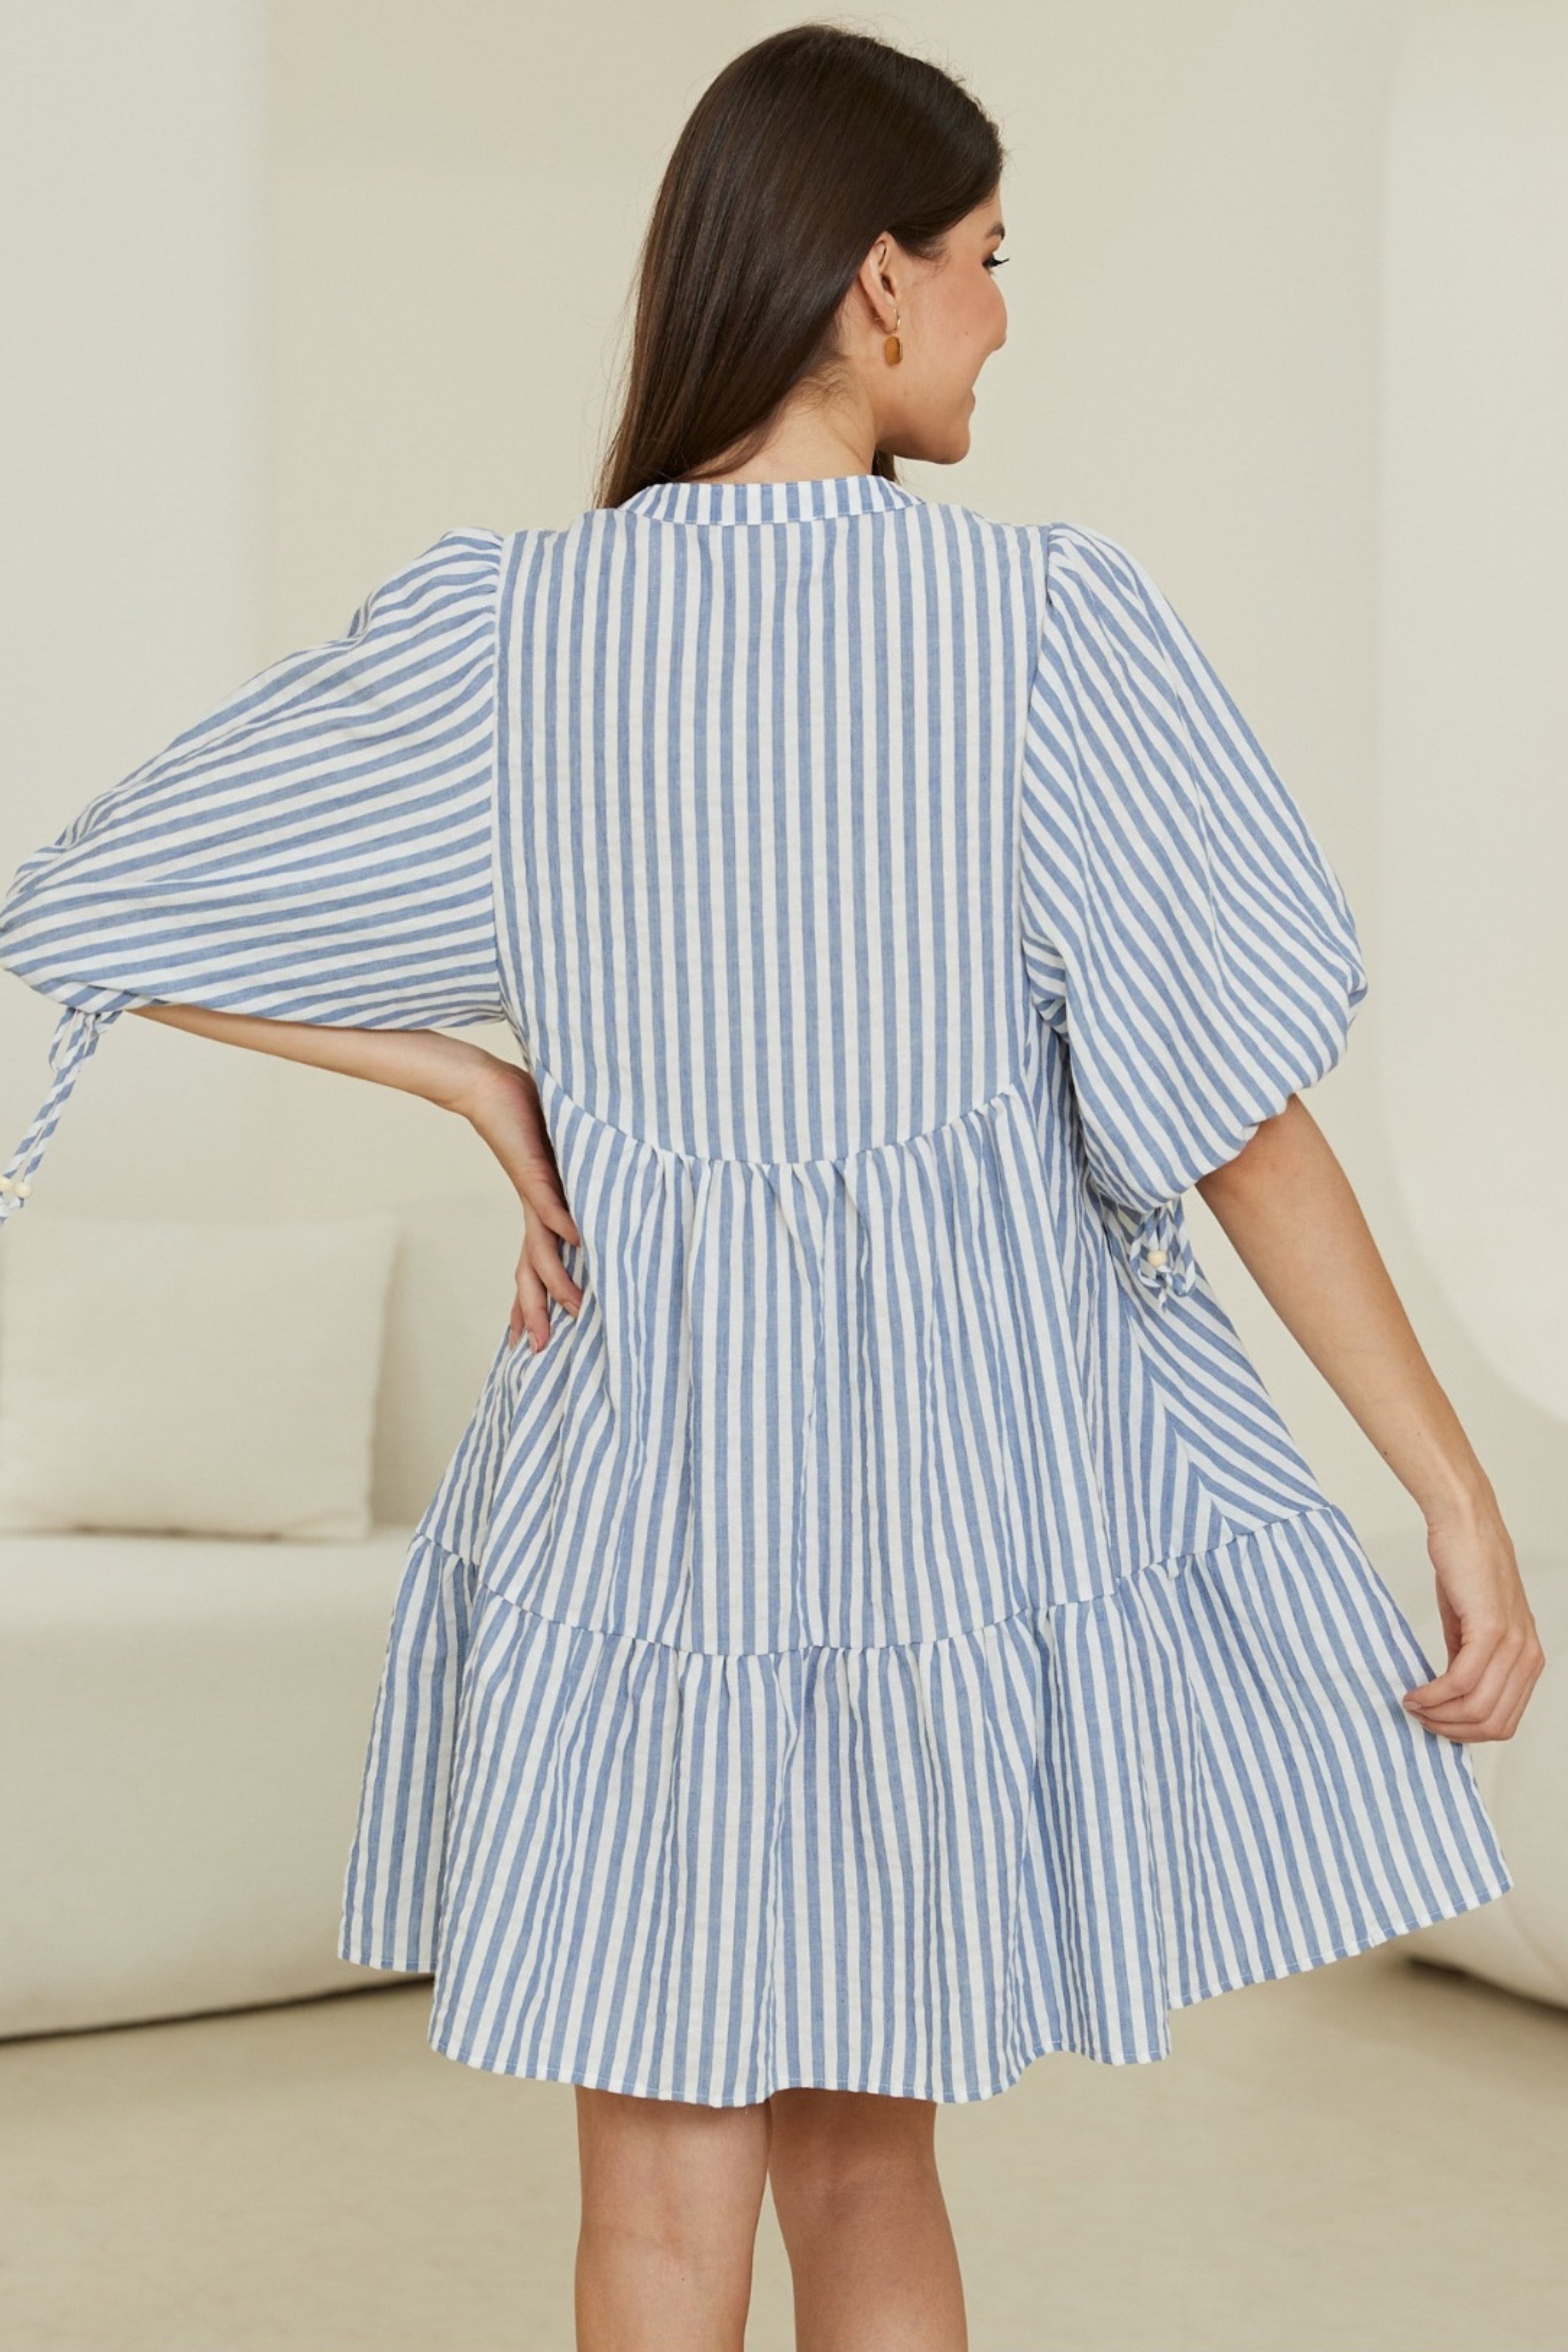 MARNI Dress in Blue and White Stripe